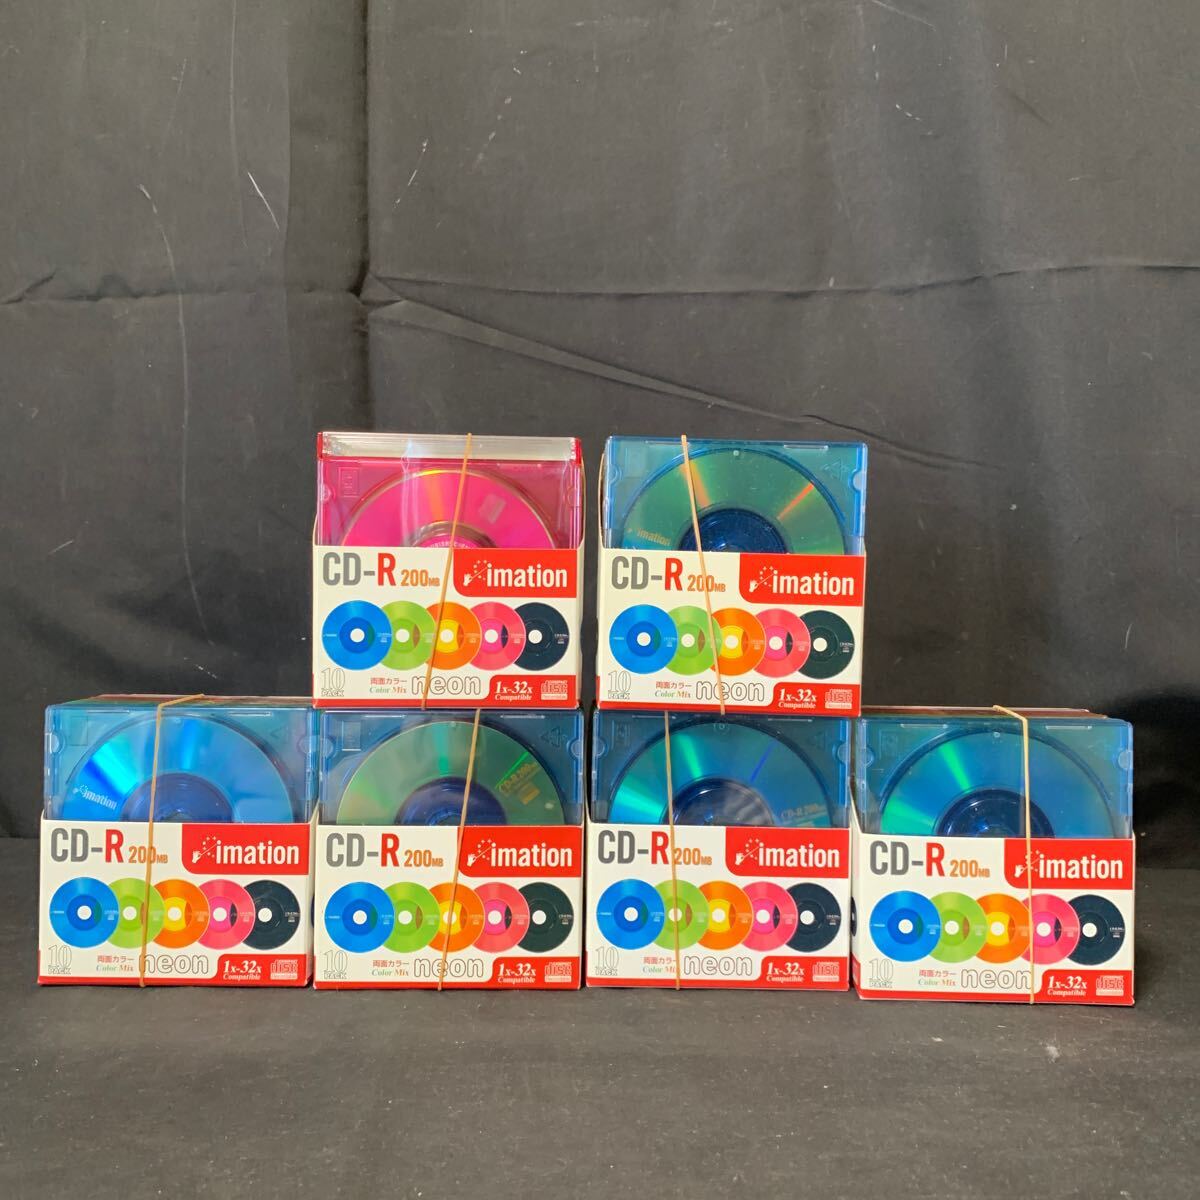 imation 8cm CD-R 200MB 両面カラー 10枚組 6個 60枚 イメーション CDシングル の画像1